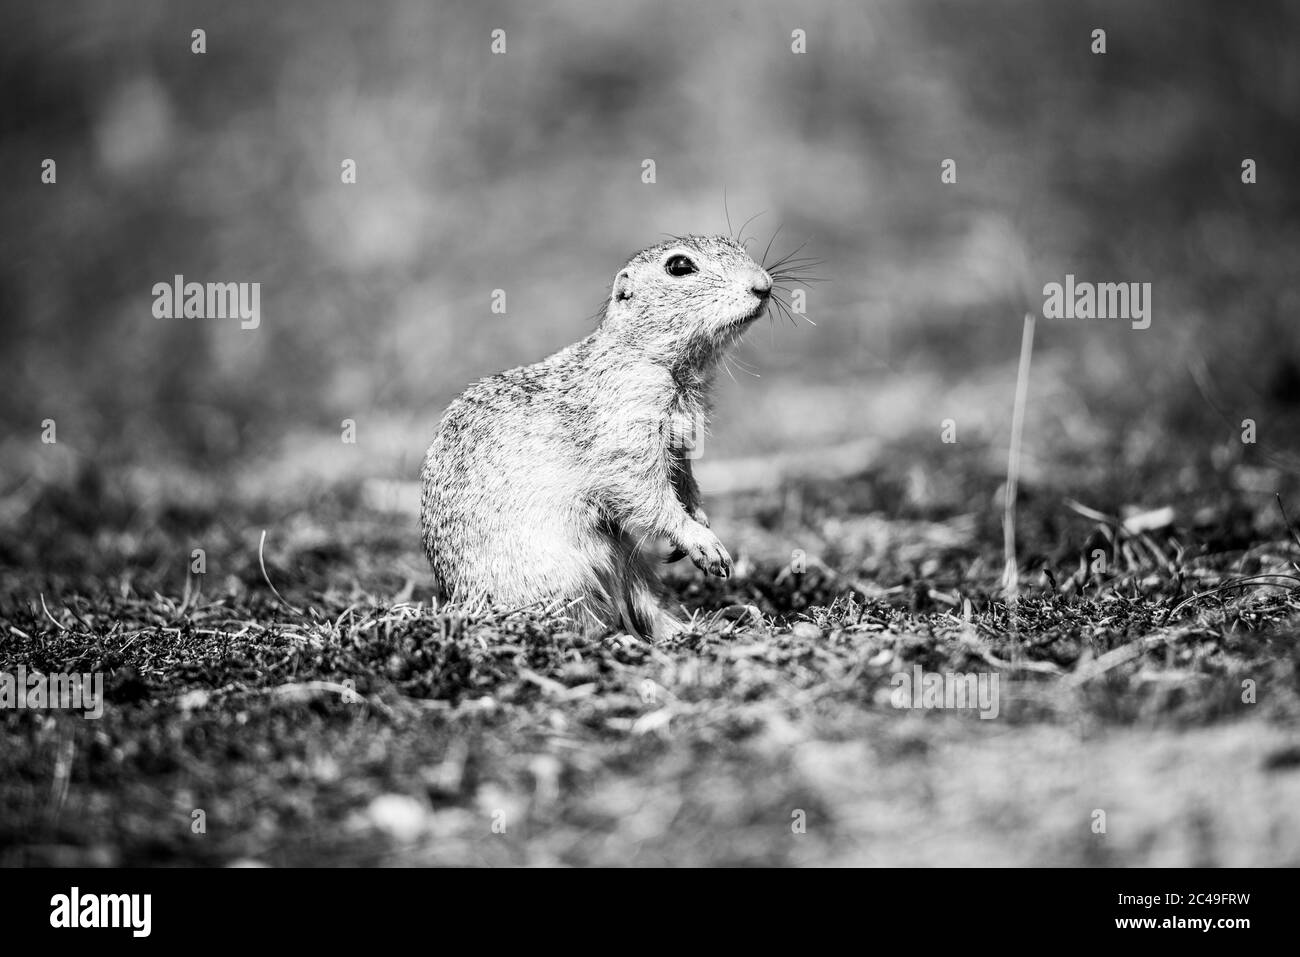 European ground squirrel, Spermophilus citellus, aka European souslik. Small cute rodent in natural habitat. Black and white image. Stock Photo